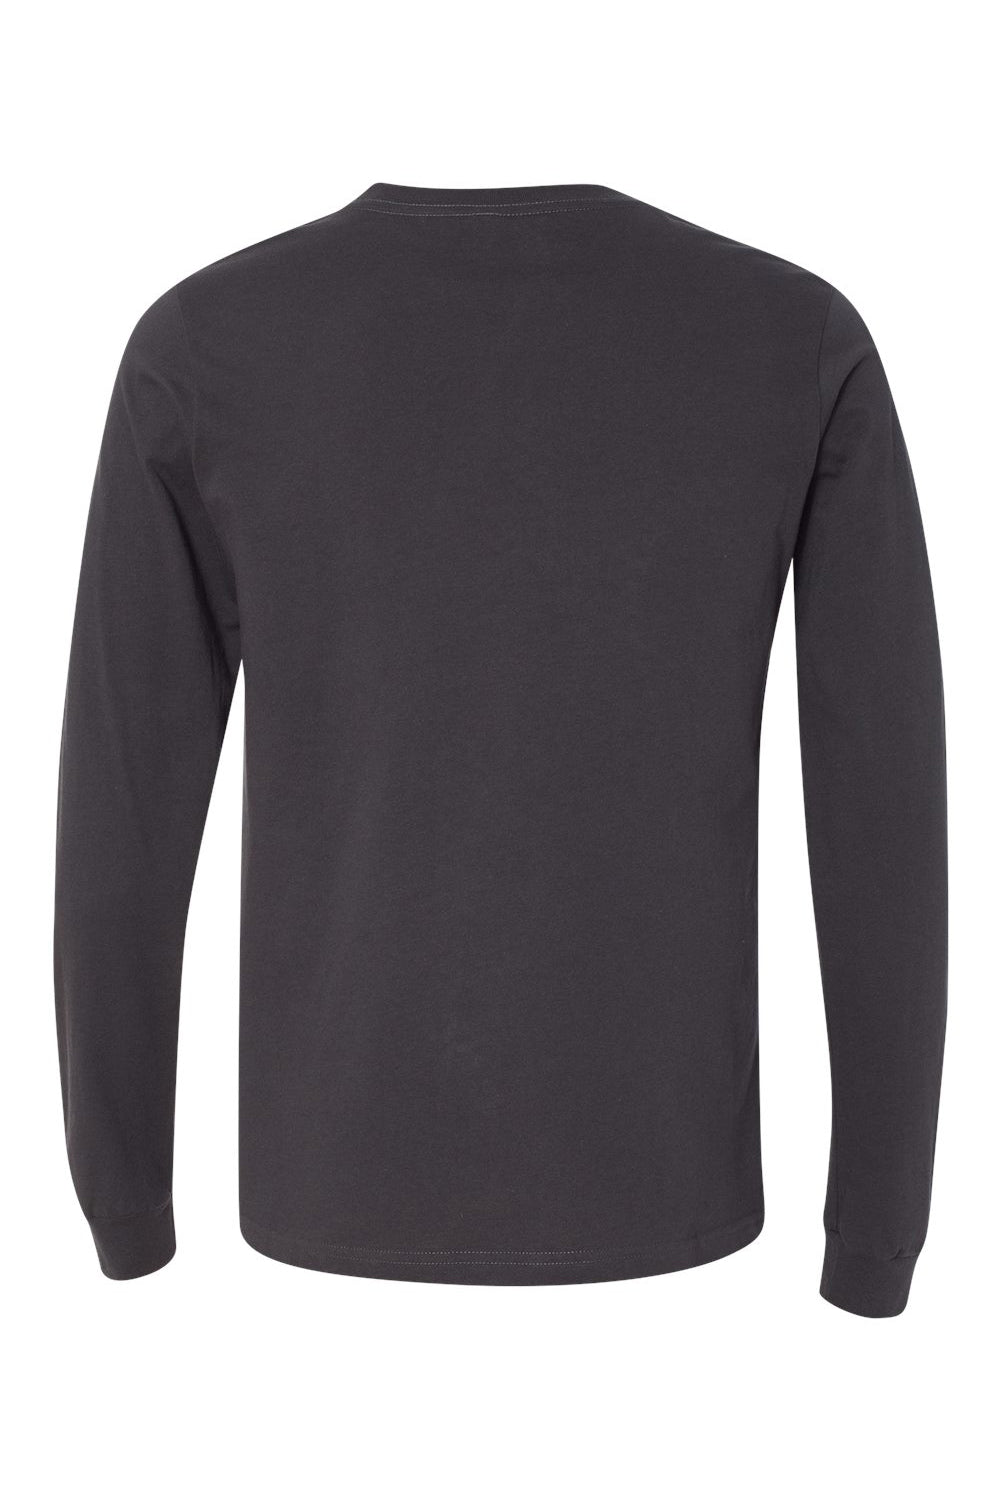 Bella + Canvas BC3501/3501 Mens Jersey Long Sleeve Crewneck T-Shirt Dark Grey Flat Back